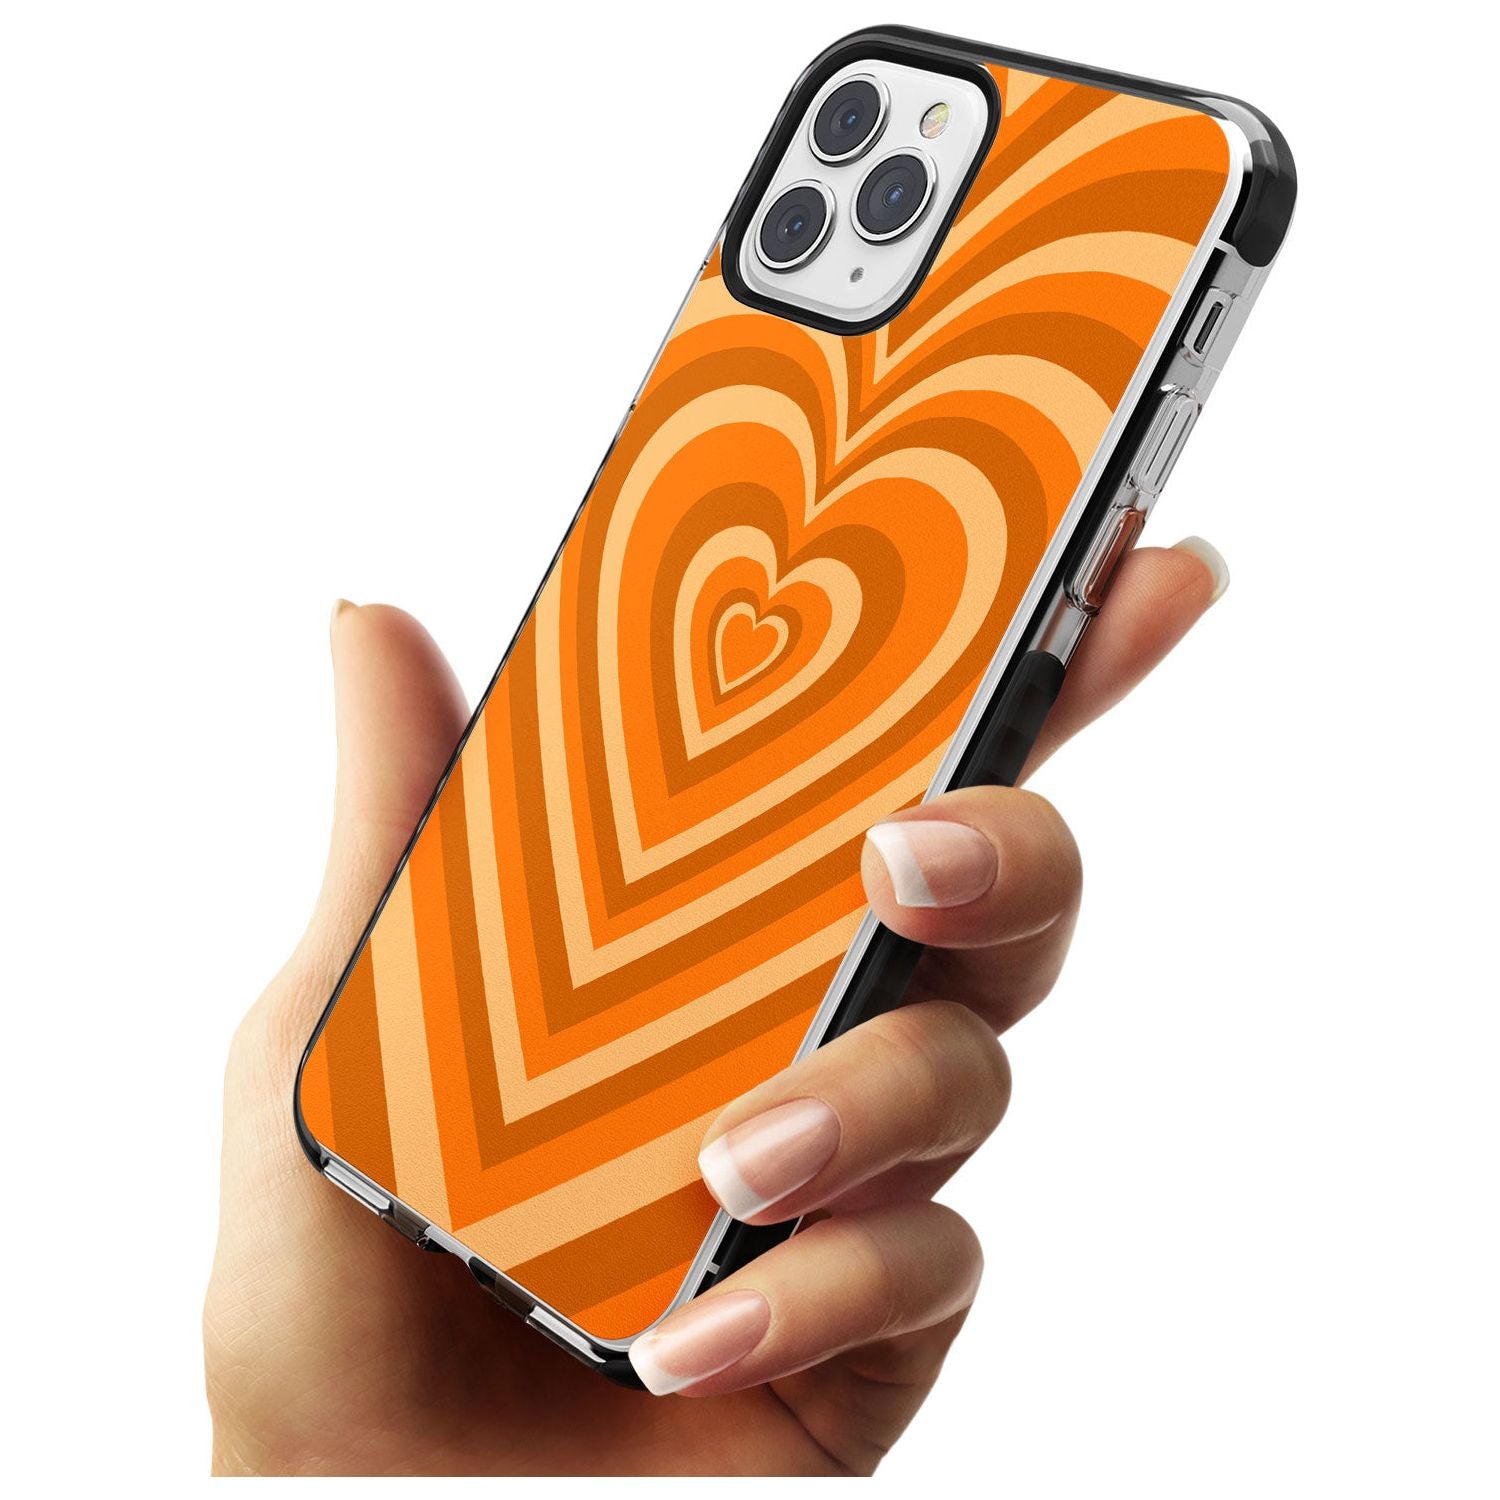 Orange Heart Illusion Black Impact Phone Case for iPhone 11